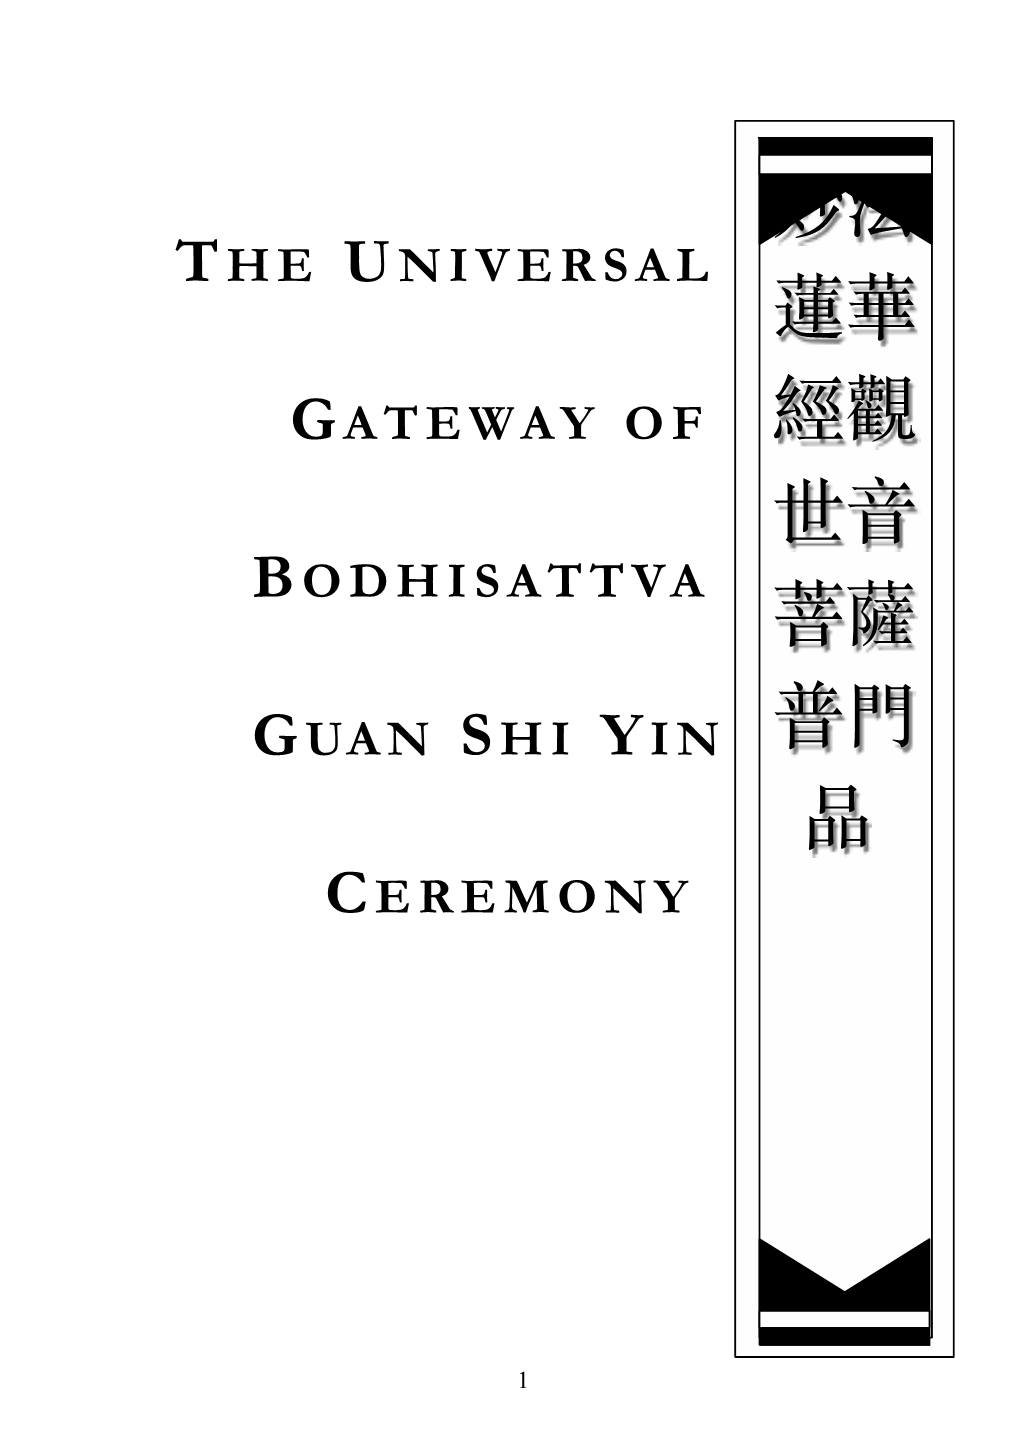 The Universal Gateway of Bodhisattva Guan Shi Yin Ceremony